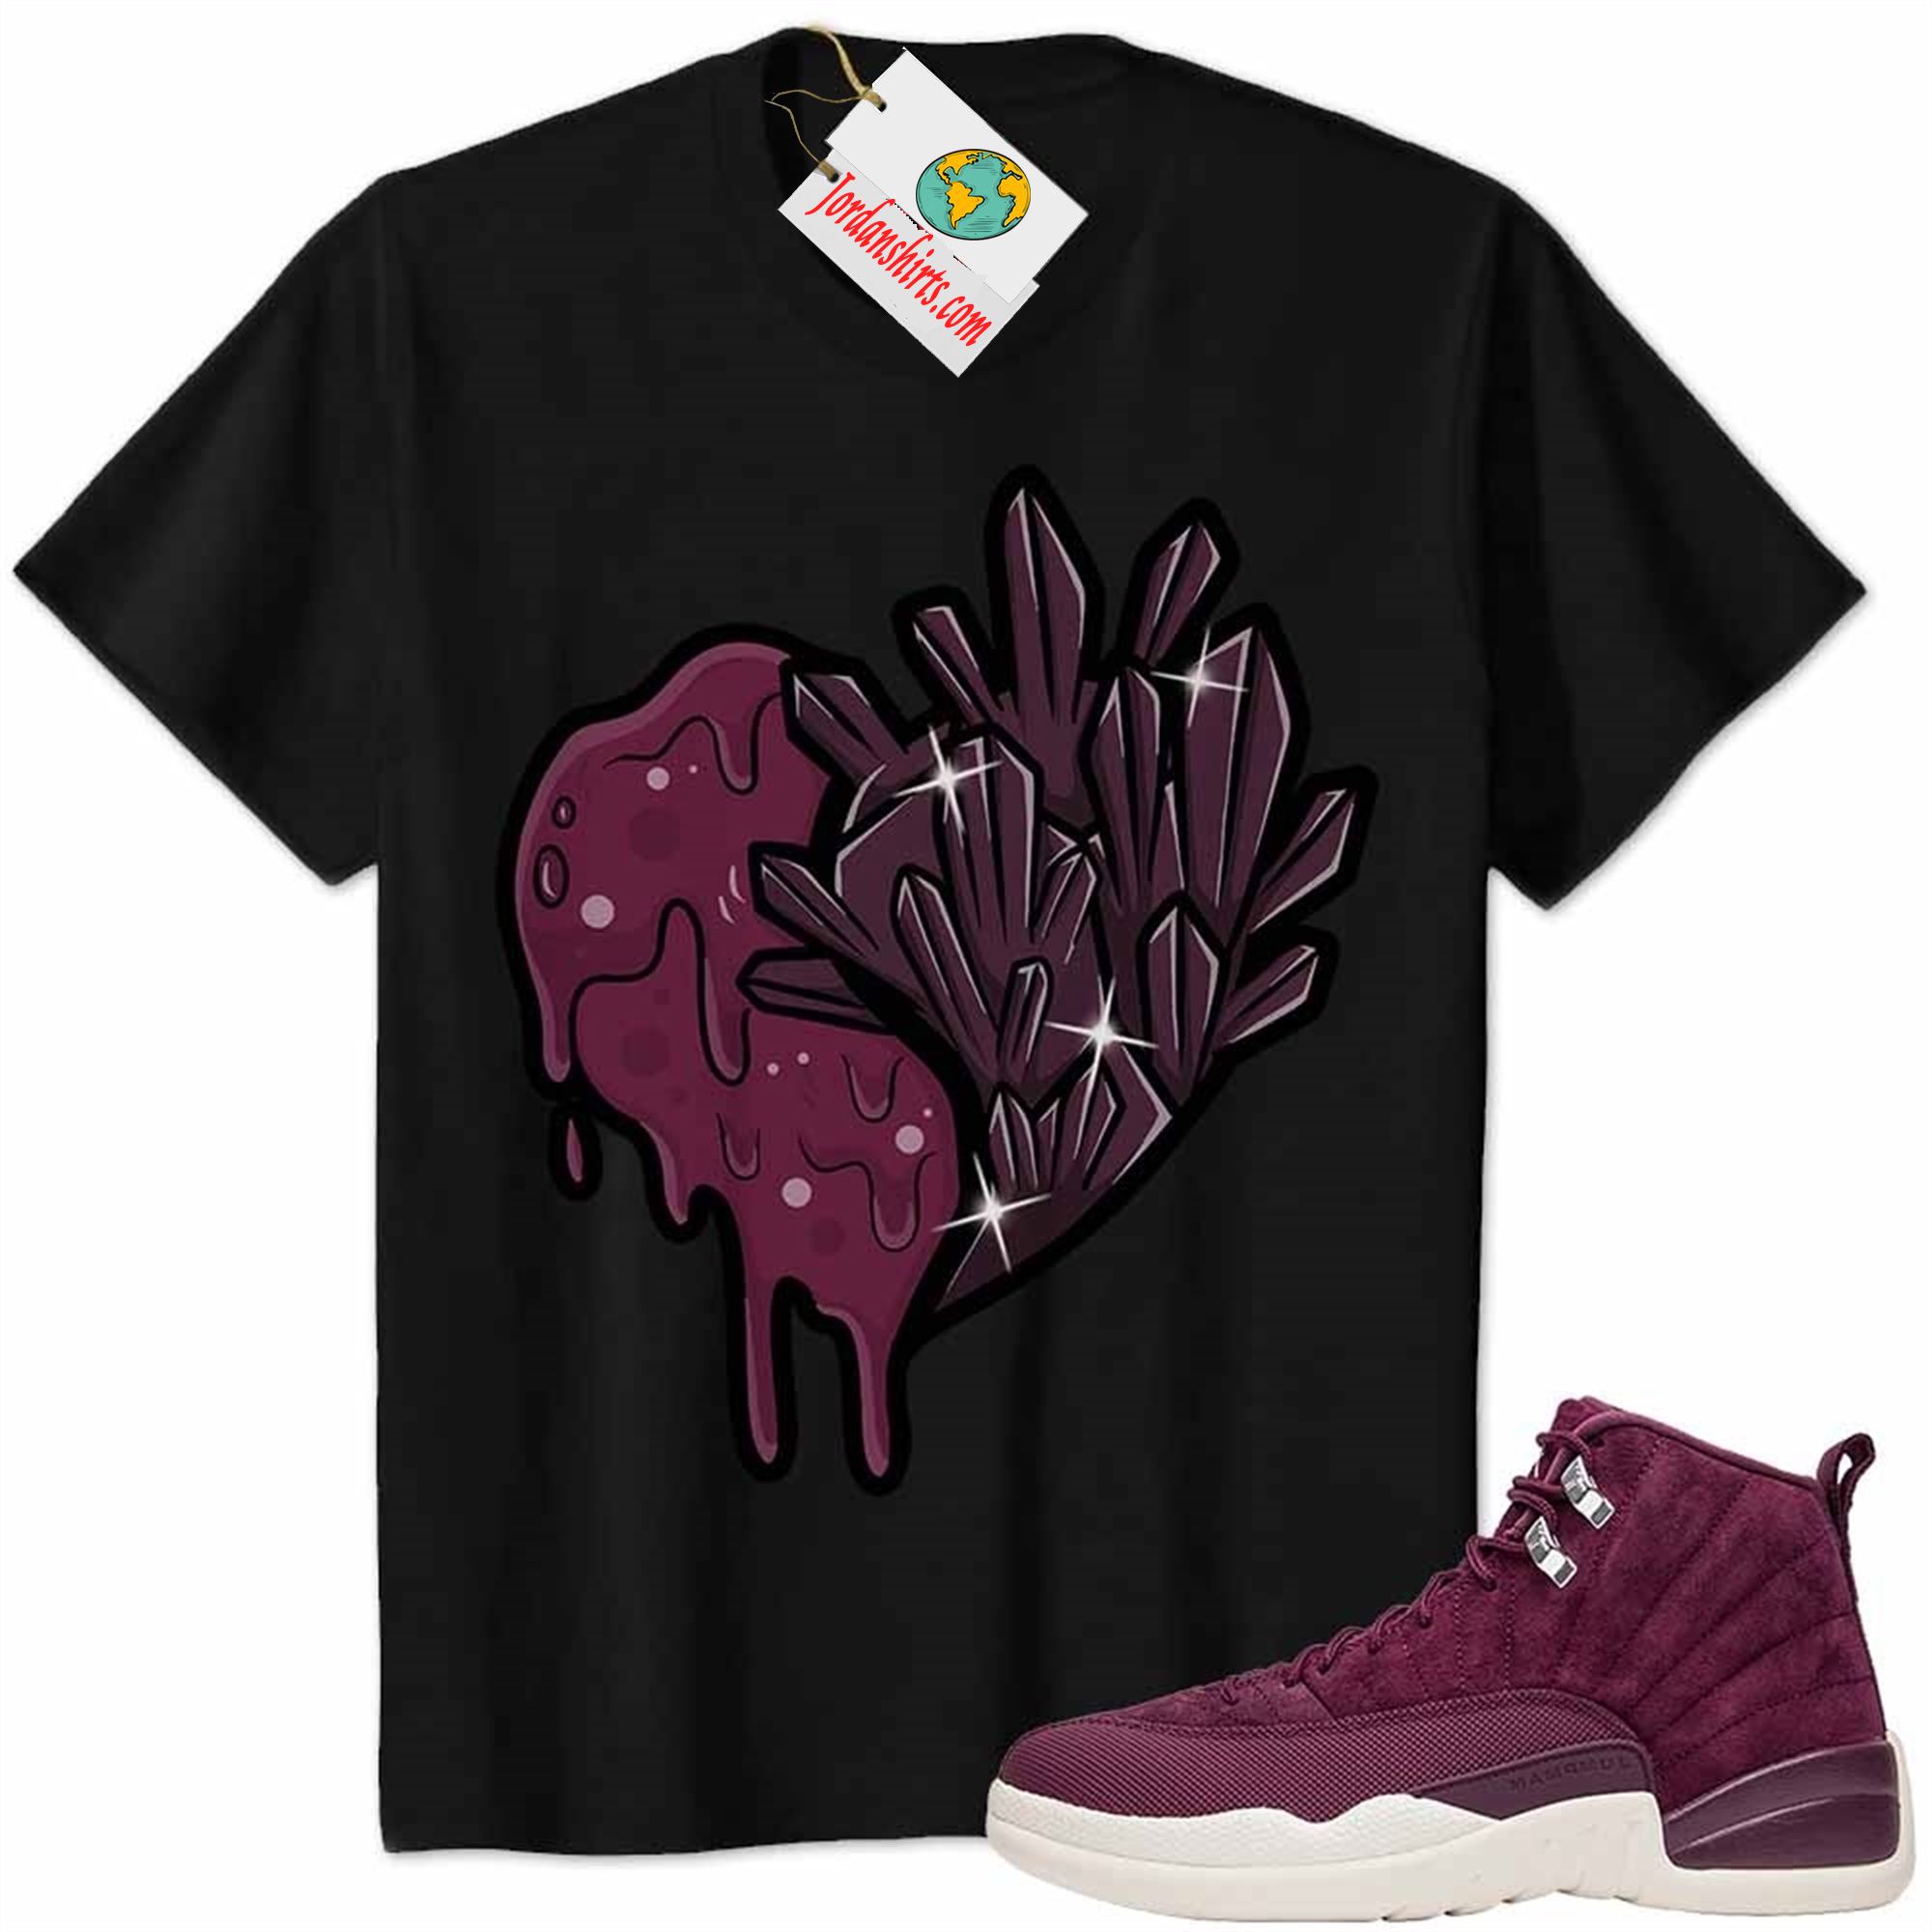 Jordan 12 Shirt, Crystal And Melt Heart Black Air Jordan 12 Bordeaux 12s Full Size Up To 5xl